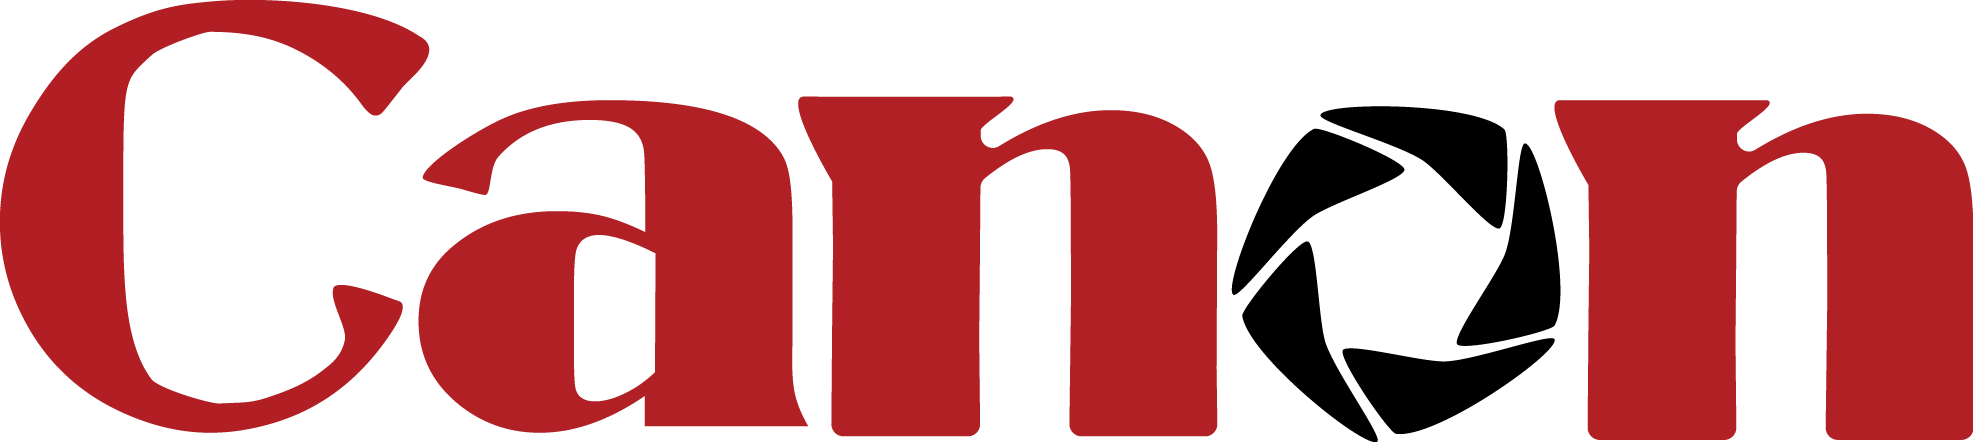 Canon Logo Redand Black PNG image